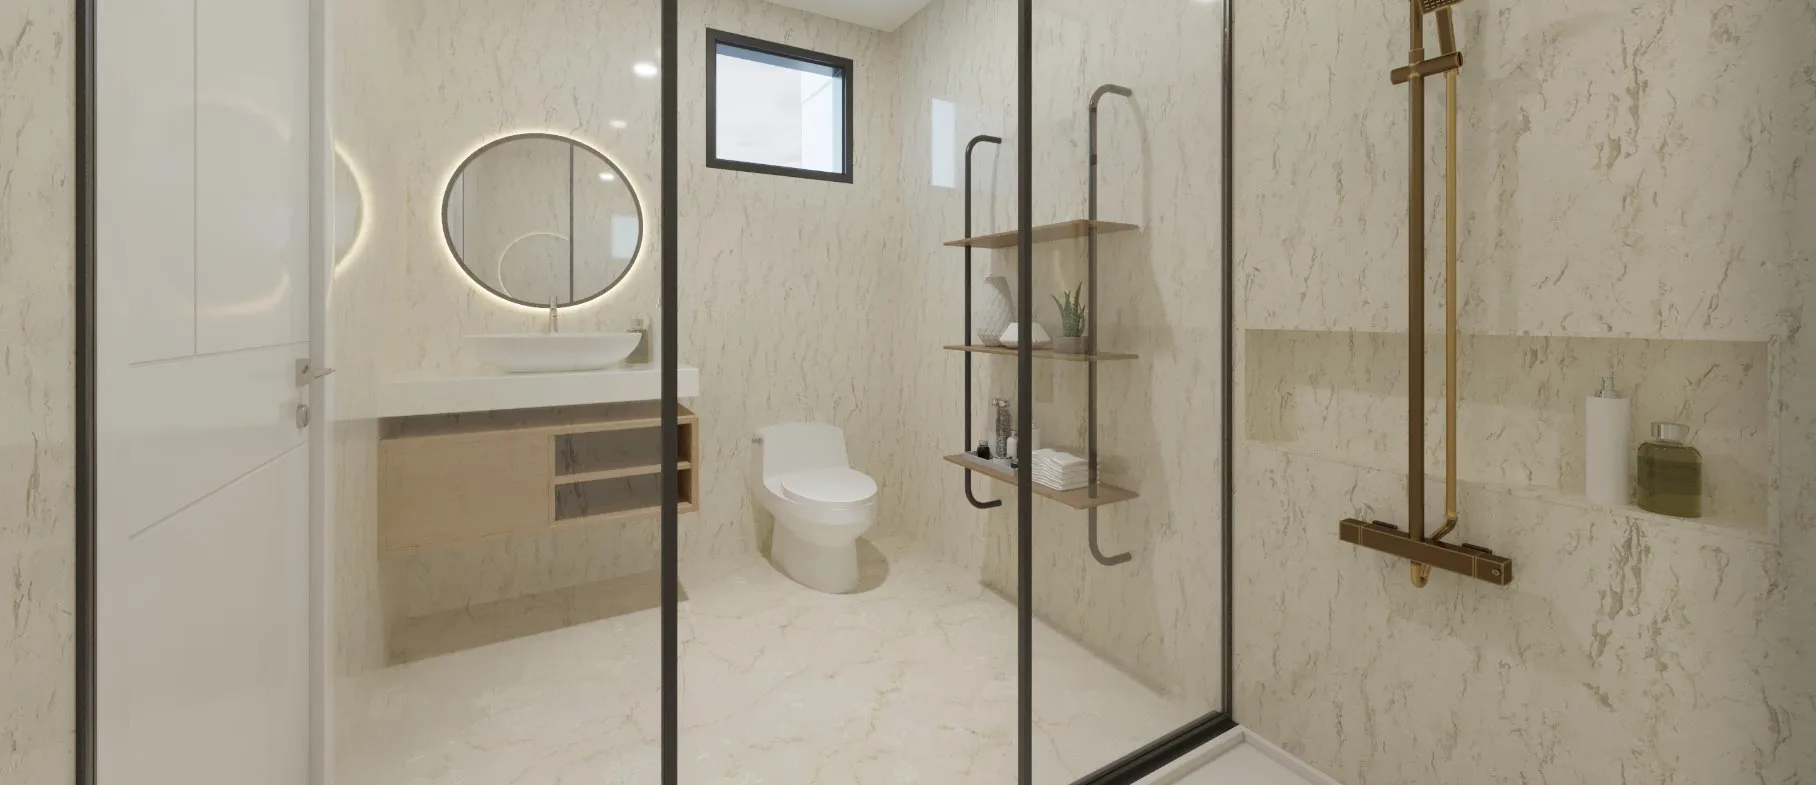 Master bathroom with shower, toilet, and sink at Nyati-Elite, Premium flats